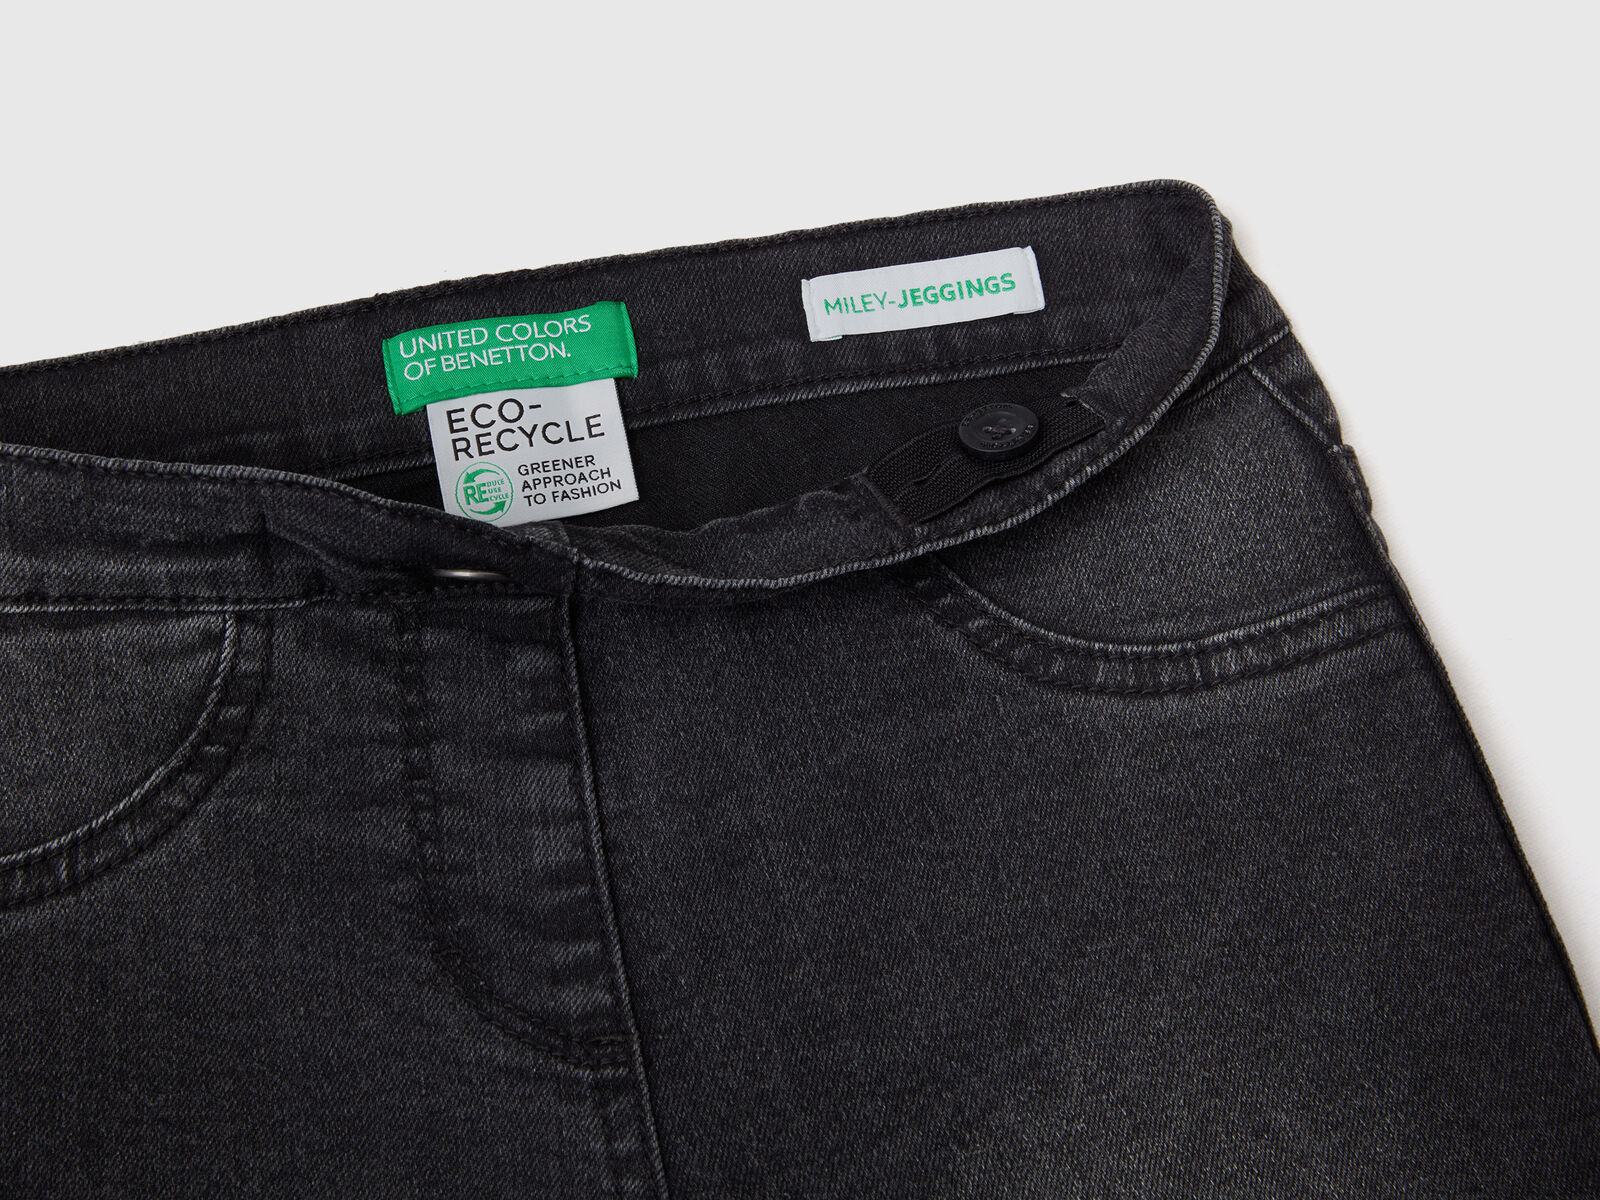 Jeans & Trousers, Benetton Jeggings Size 30